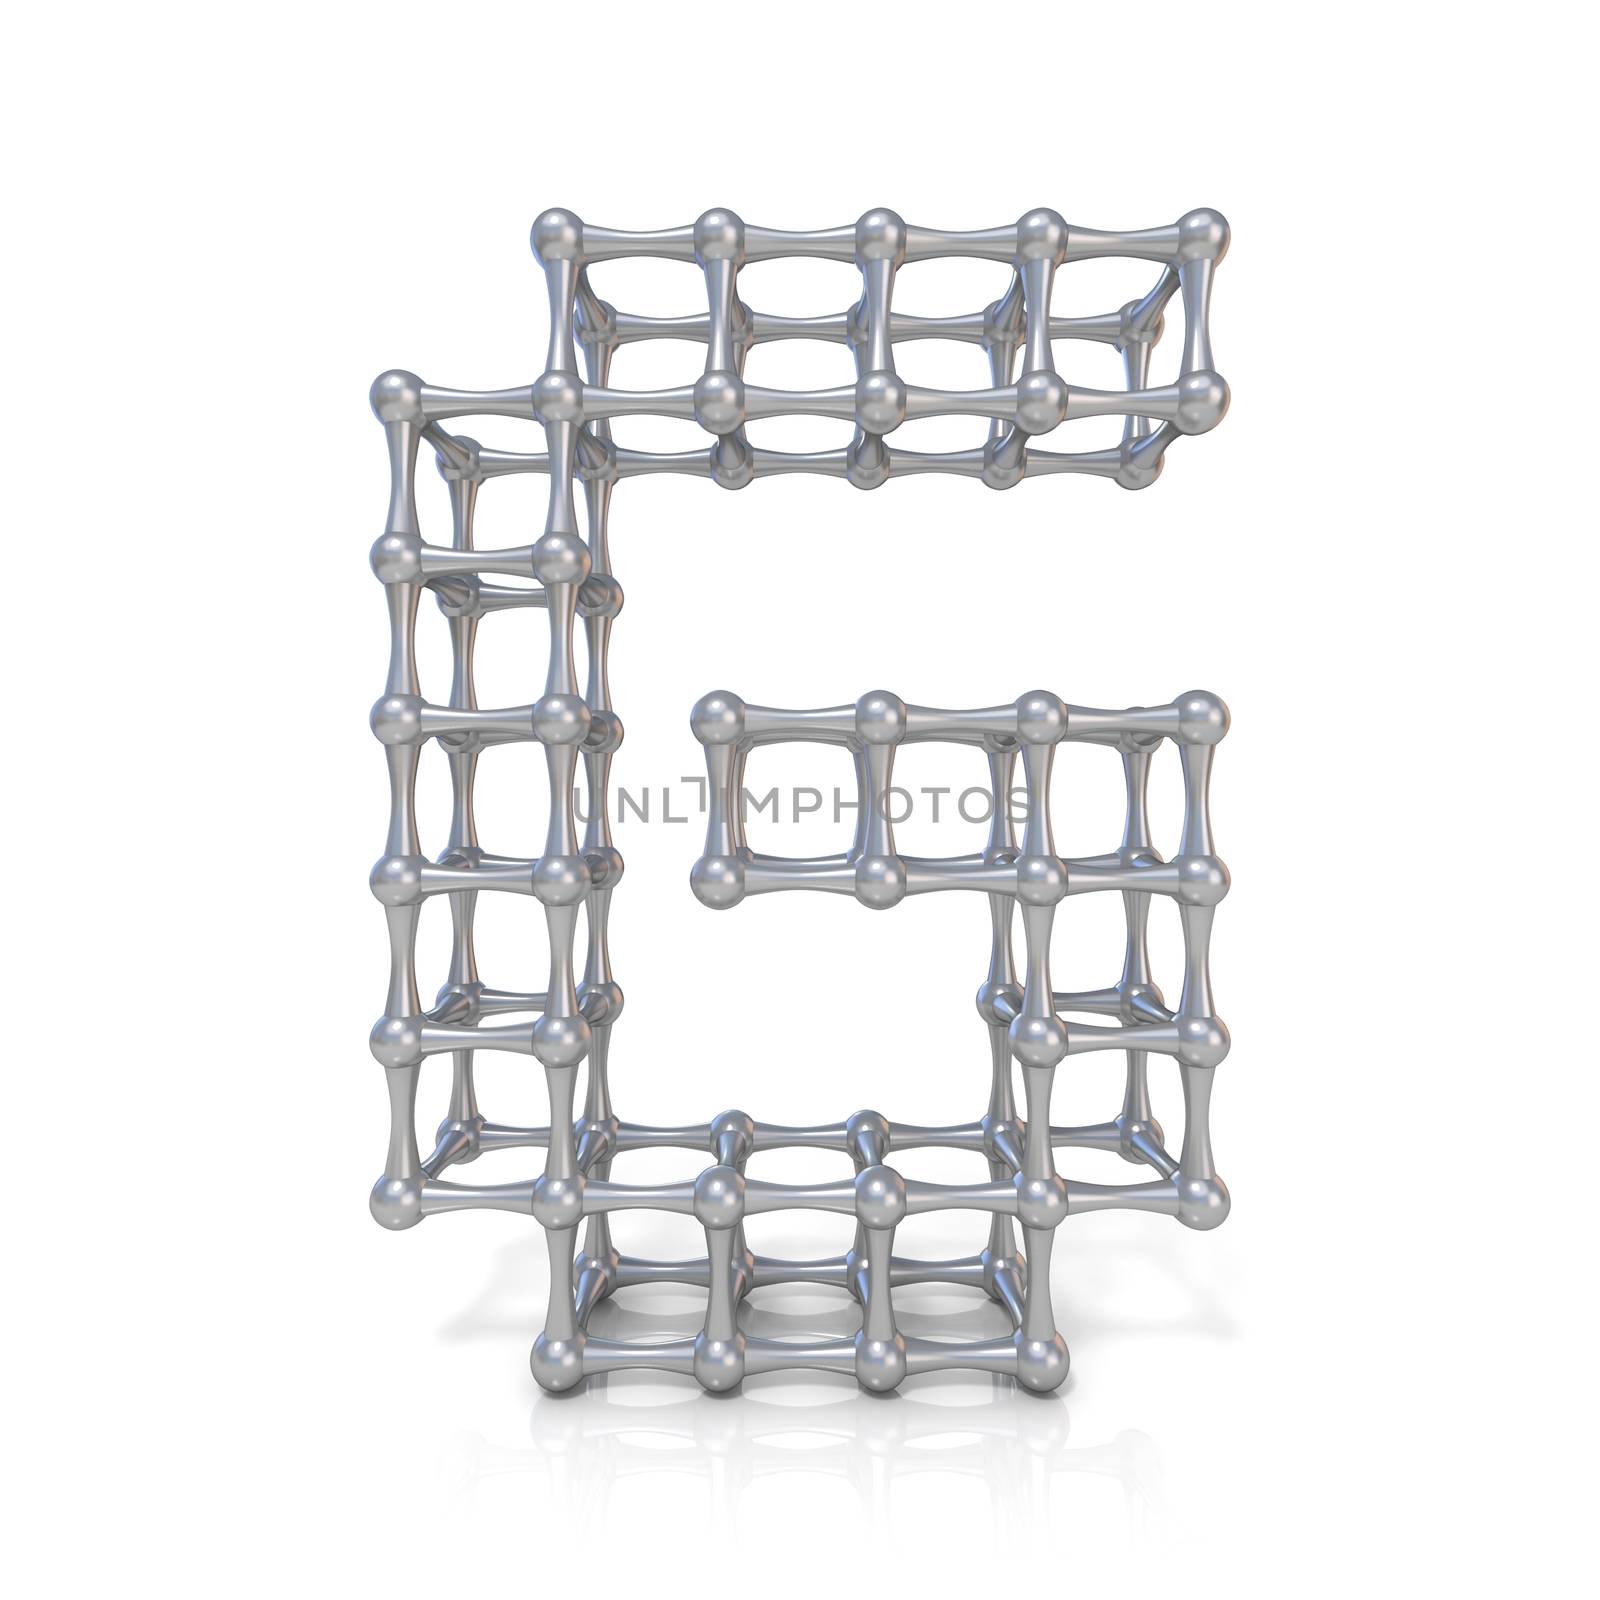 Metal lattice font letter G 3D render illustration isolated on white background